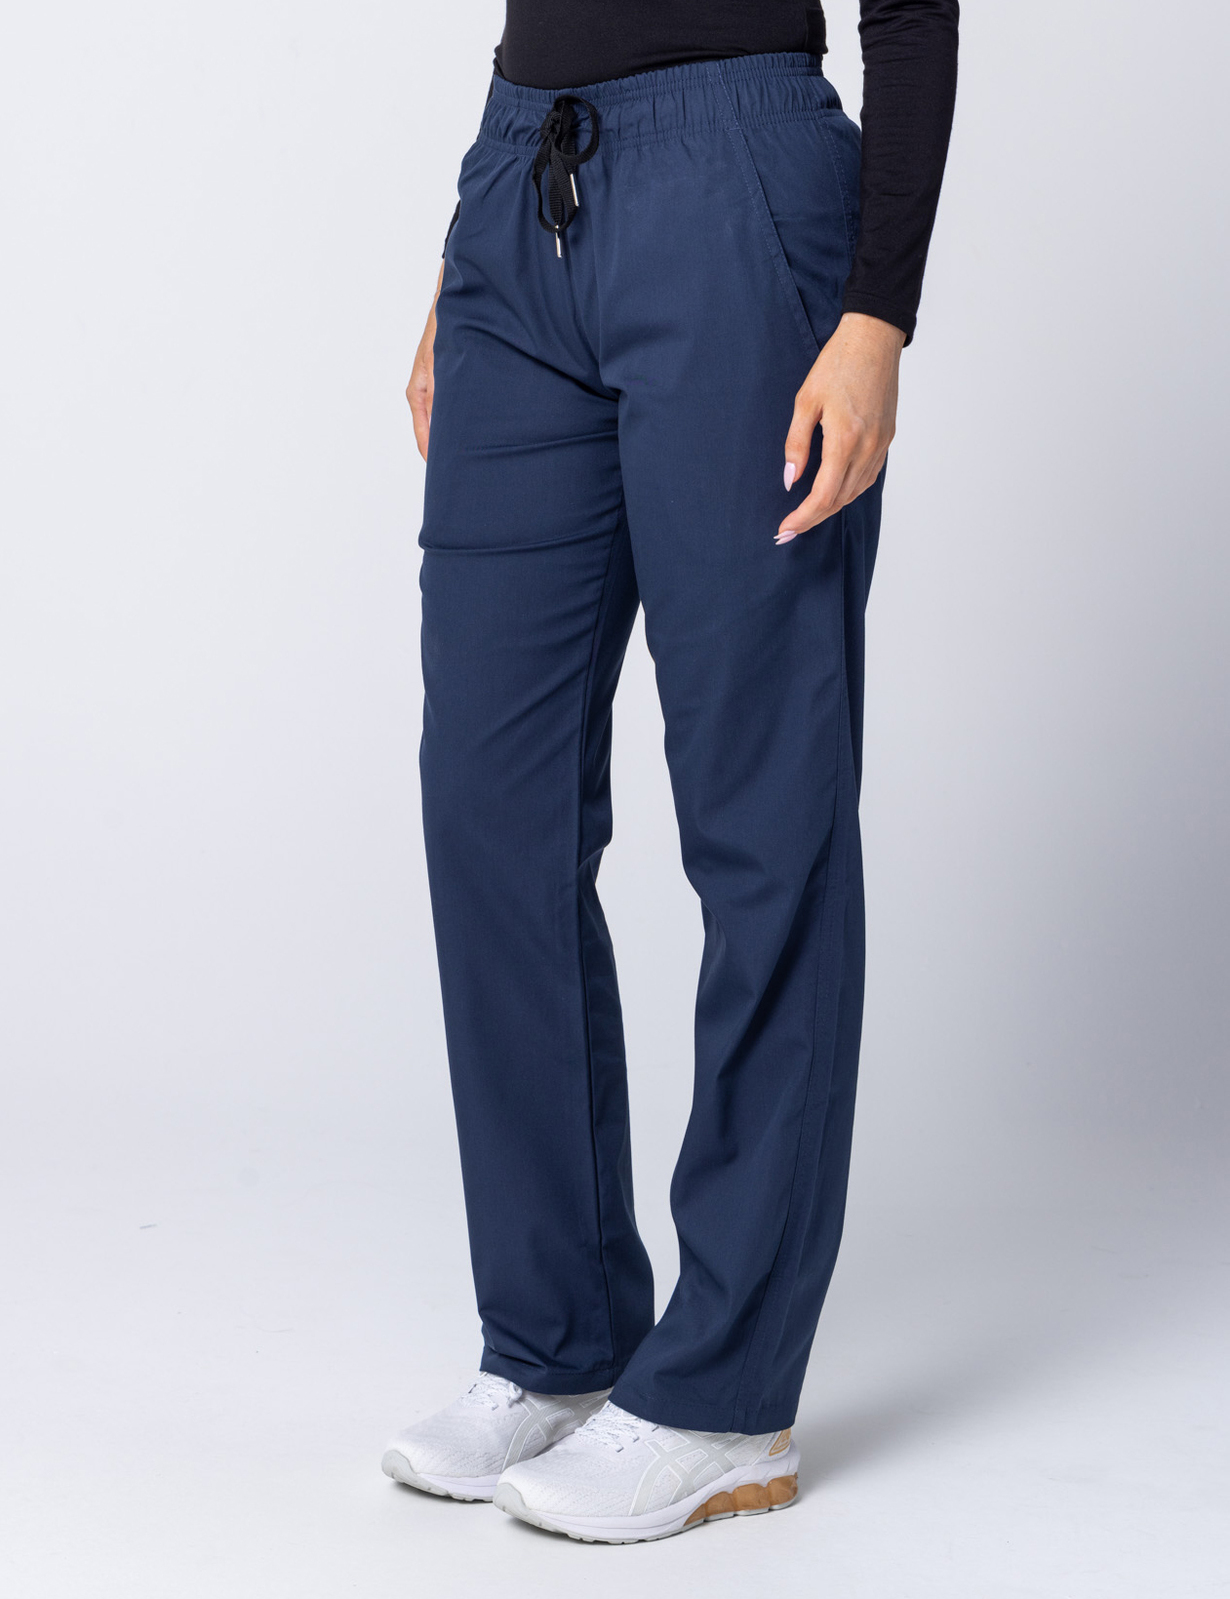 Women's Regular Cut Pants - Navy - 5x Large